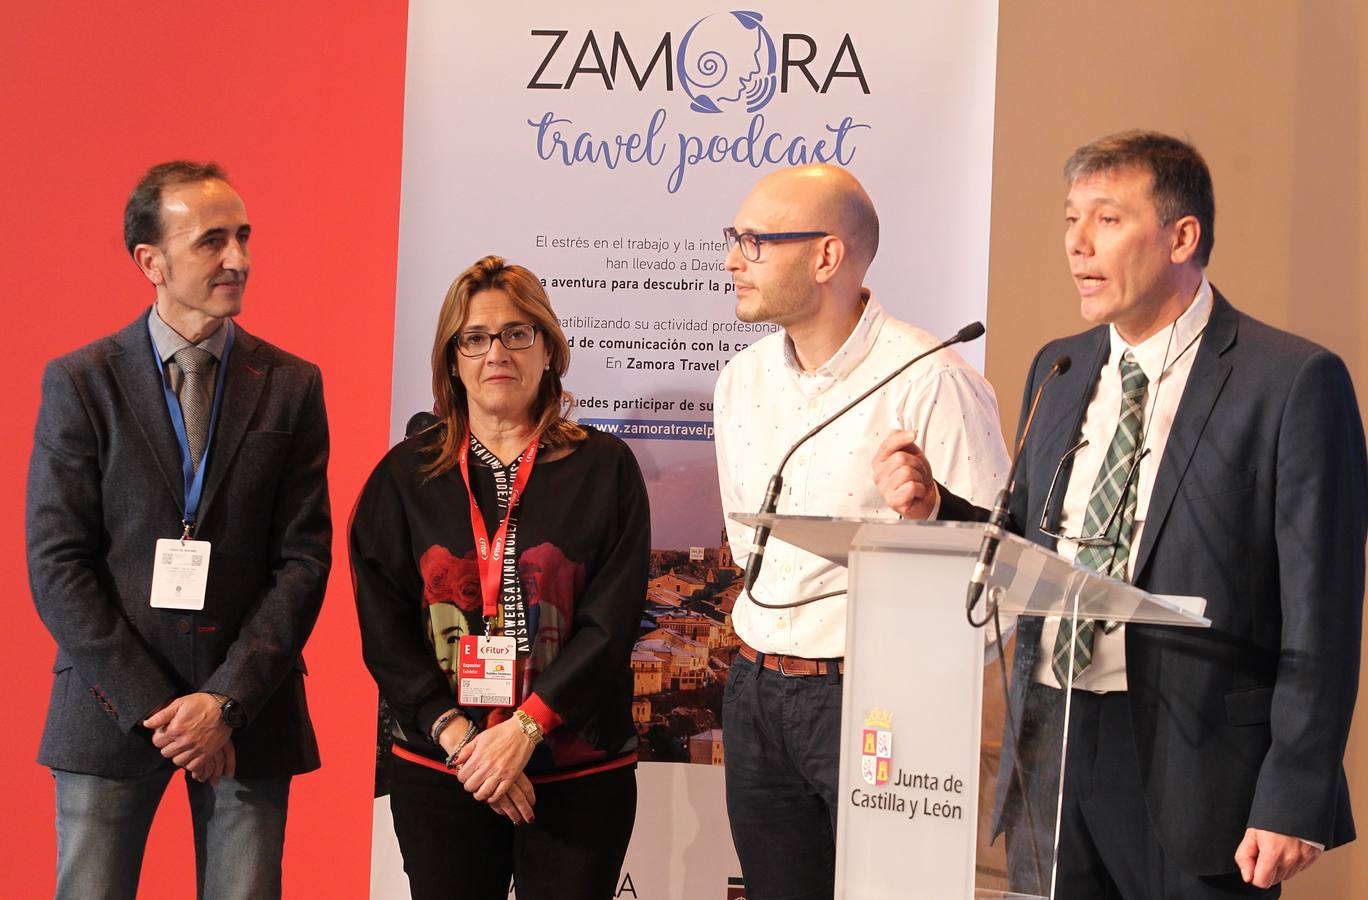 La presidenta de la Diputación de Zamora, Marte Martín Pozo, presenta la oferta turística de la provincia.